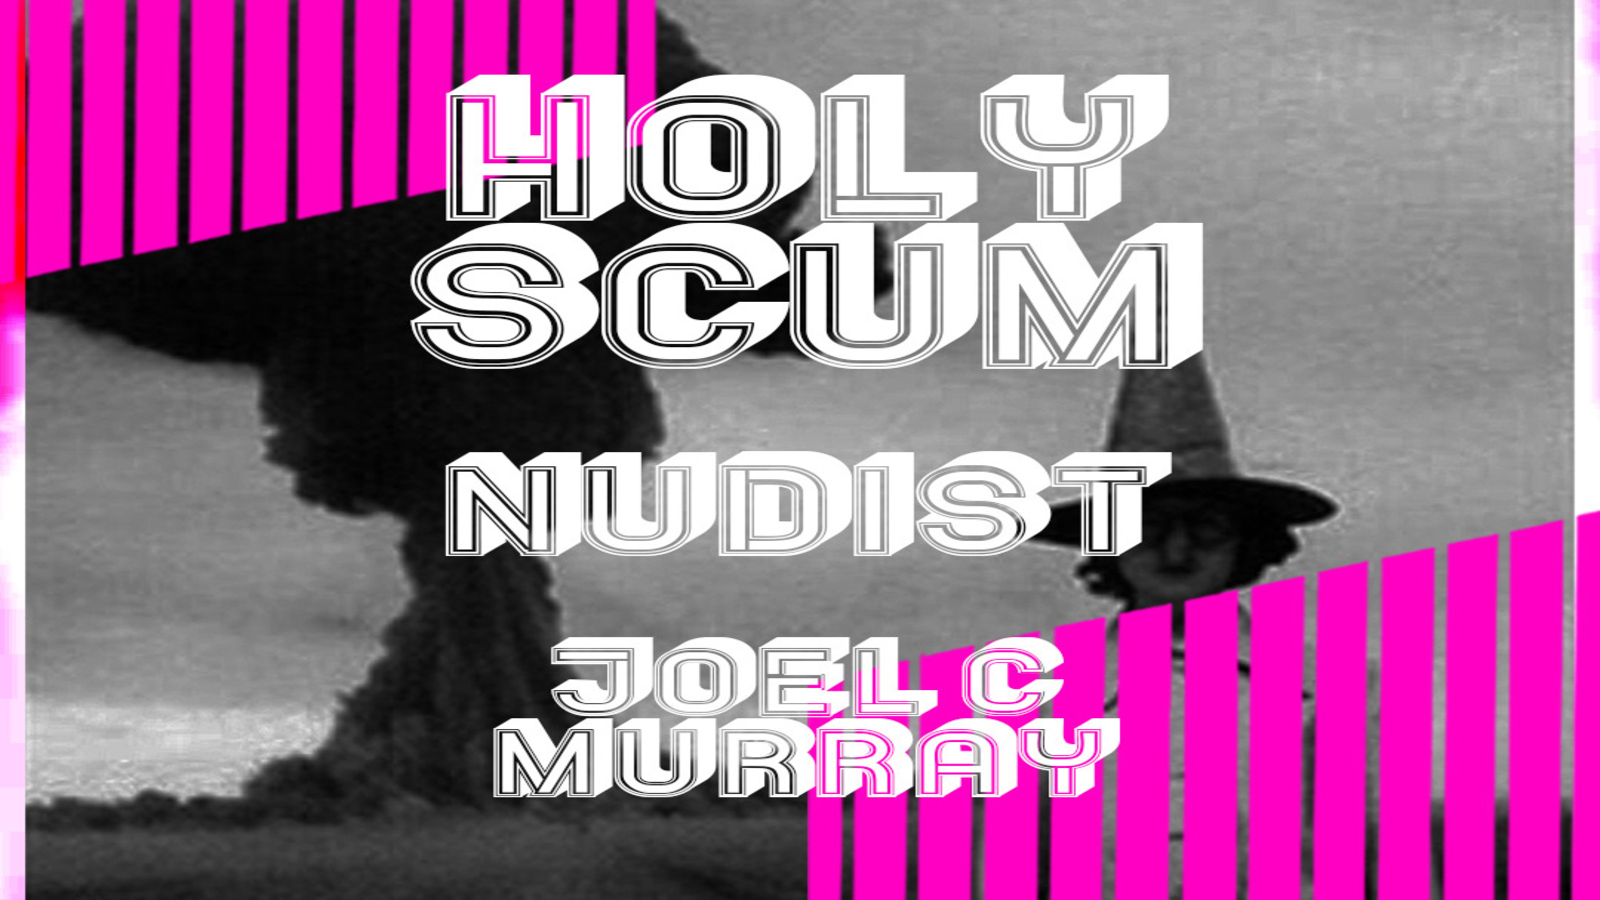 HOLY SCUM + Nudist + Joel C. Murray